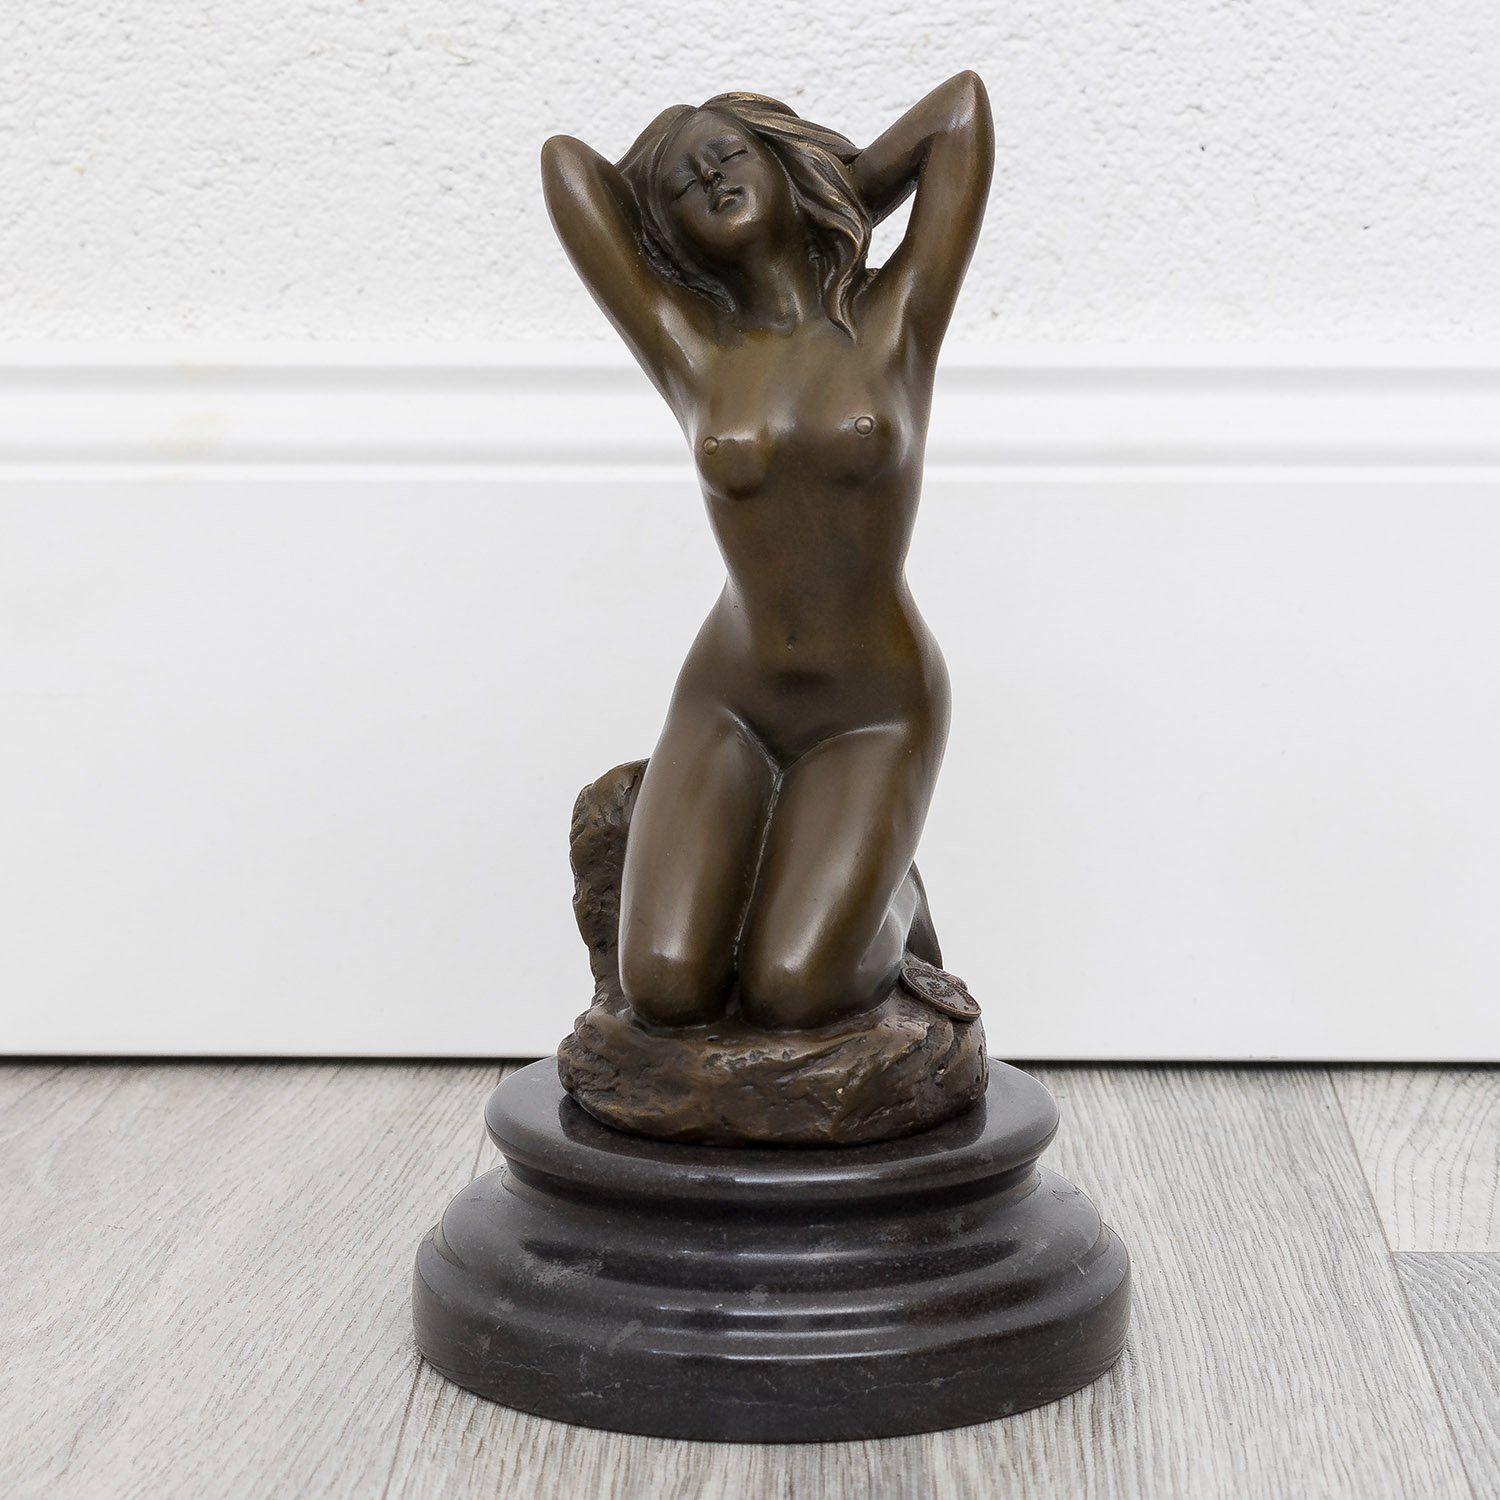 Antik-Stil Erotik Kunst Figur erotische Skulptur Sta Aubaho Bronzeskulptur Frau Bronze